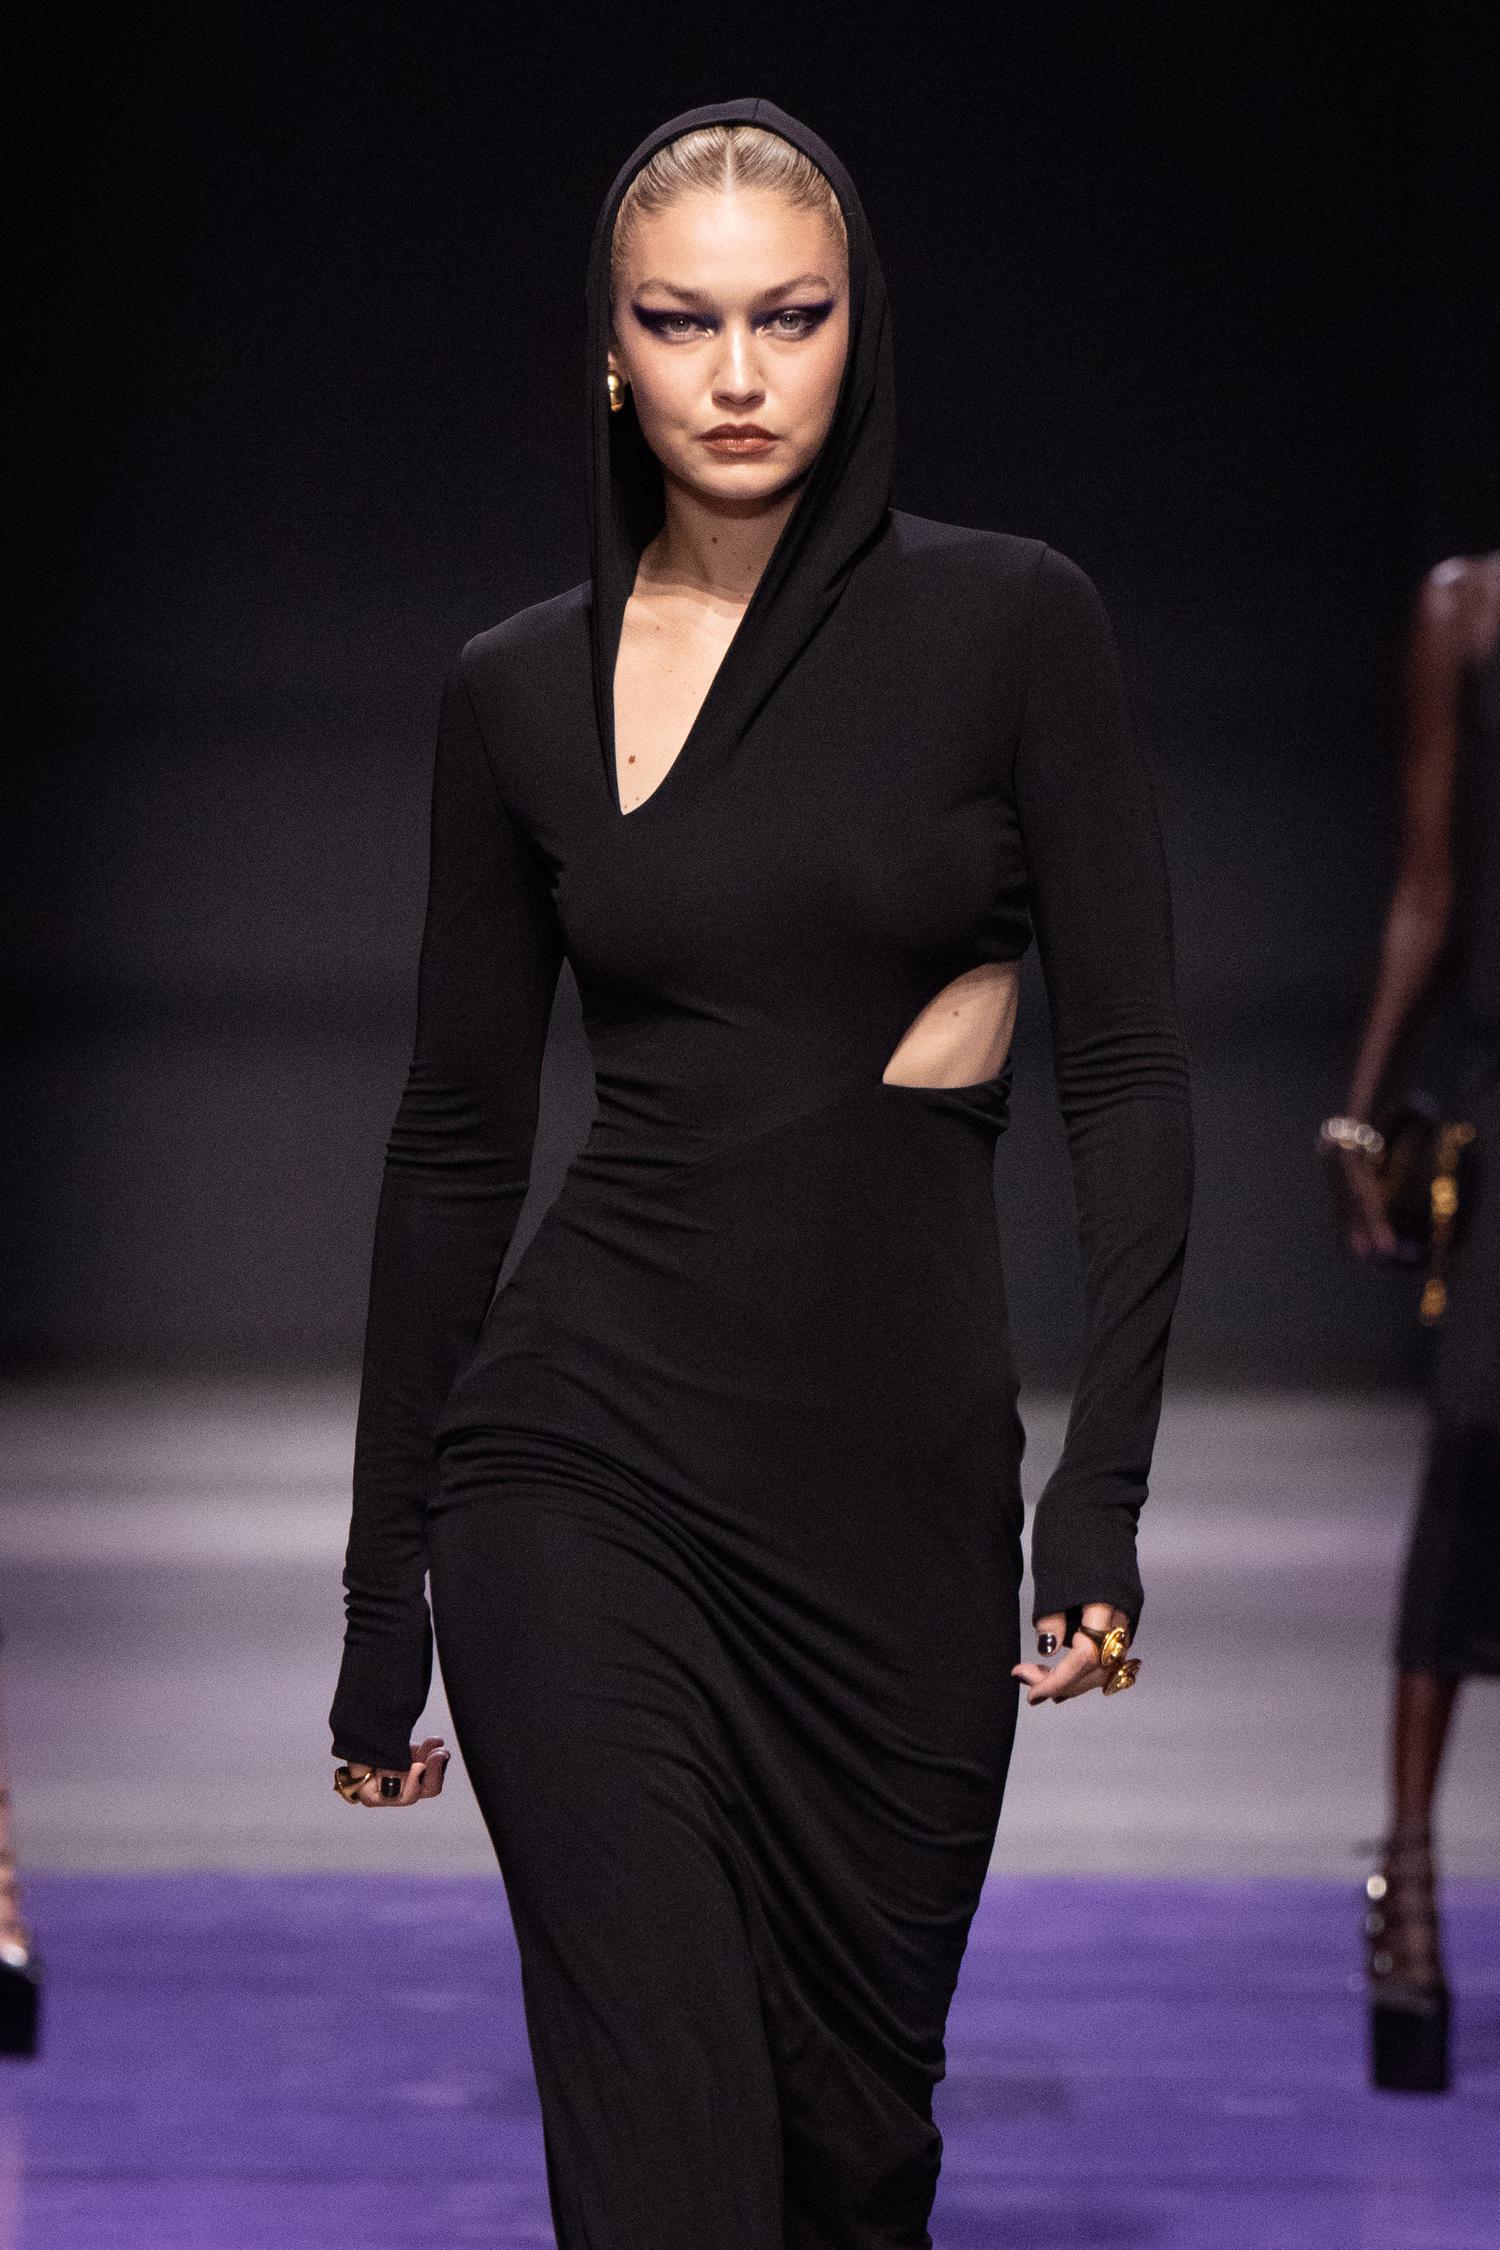 Gigi Hadid walking for Versace wearing a long black hooded dress